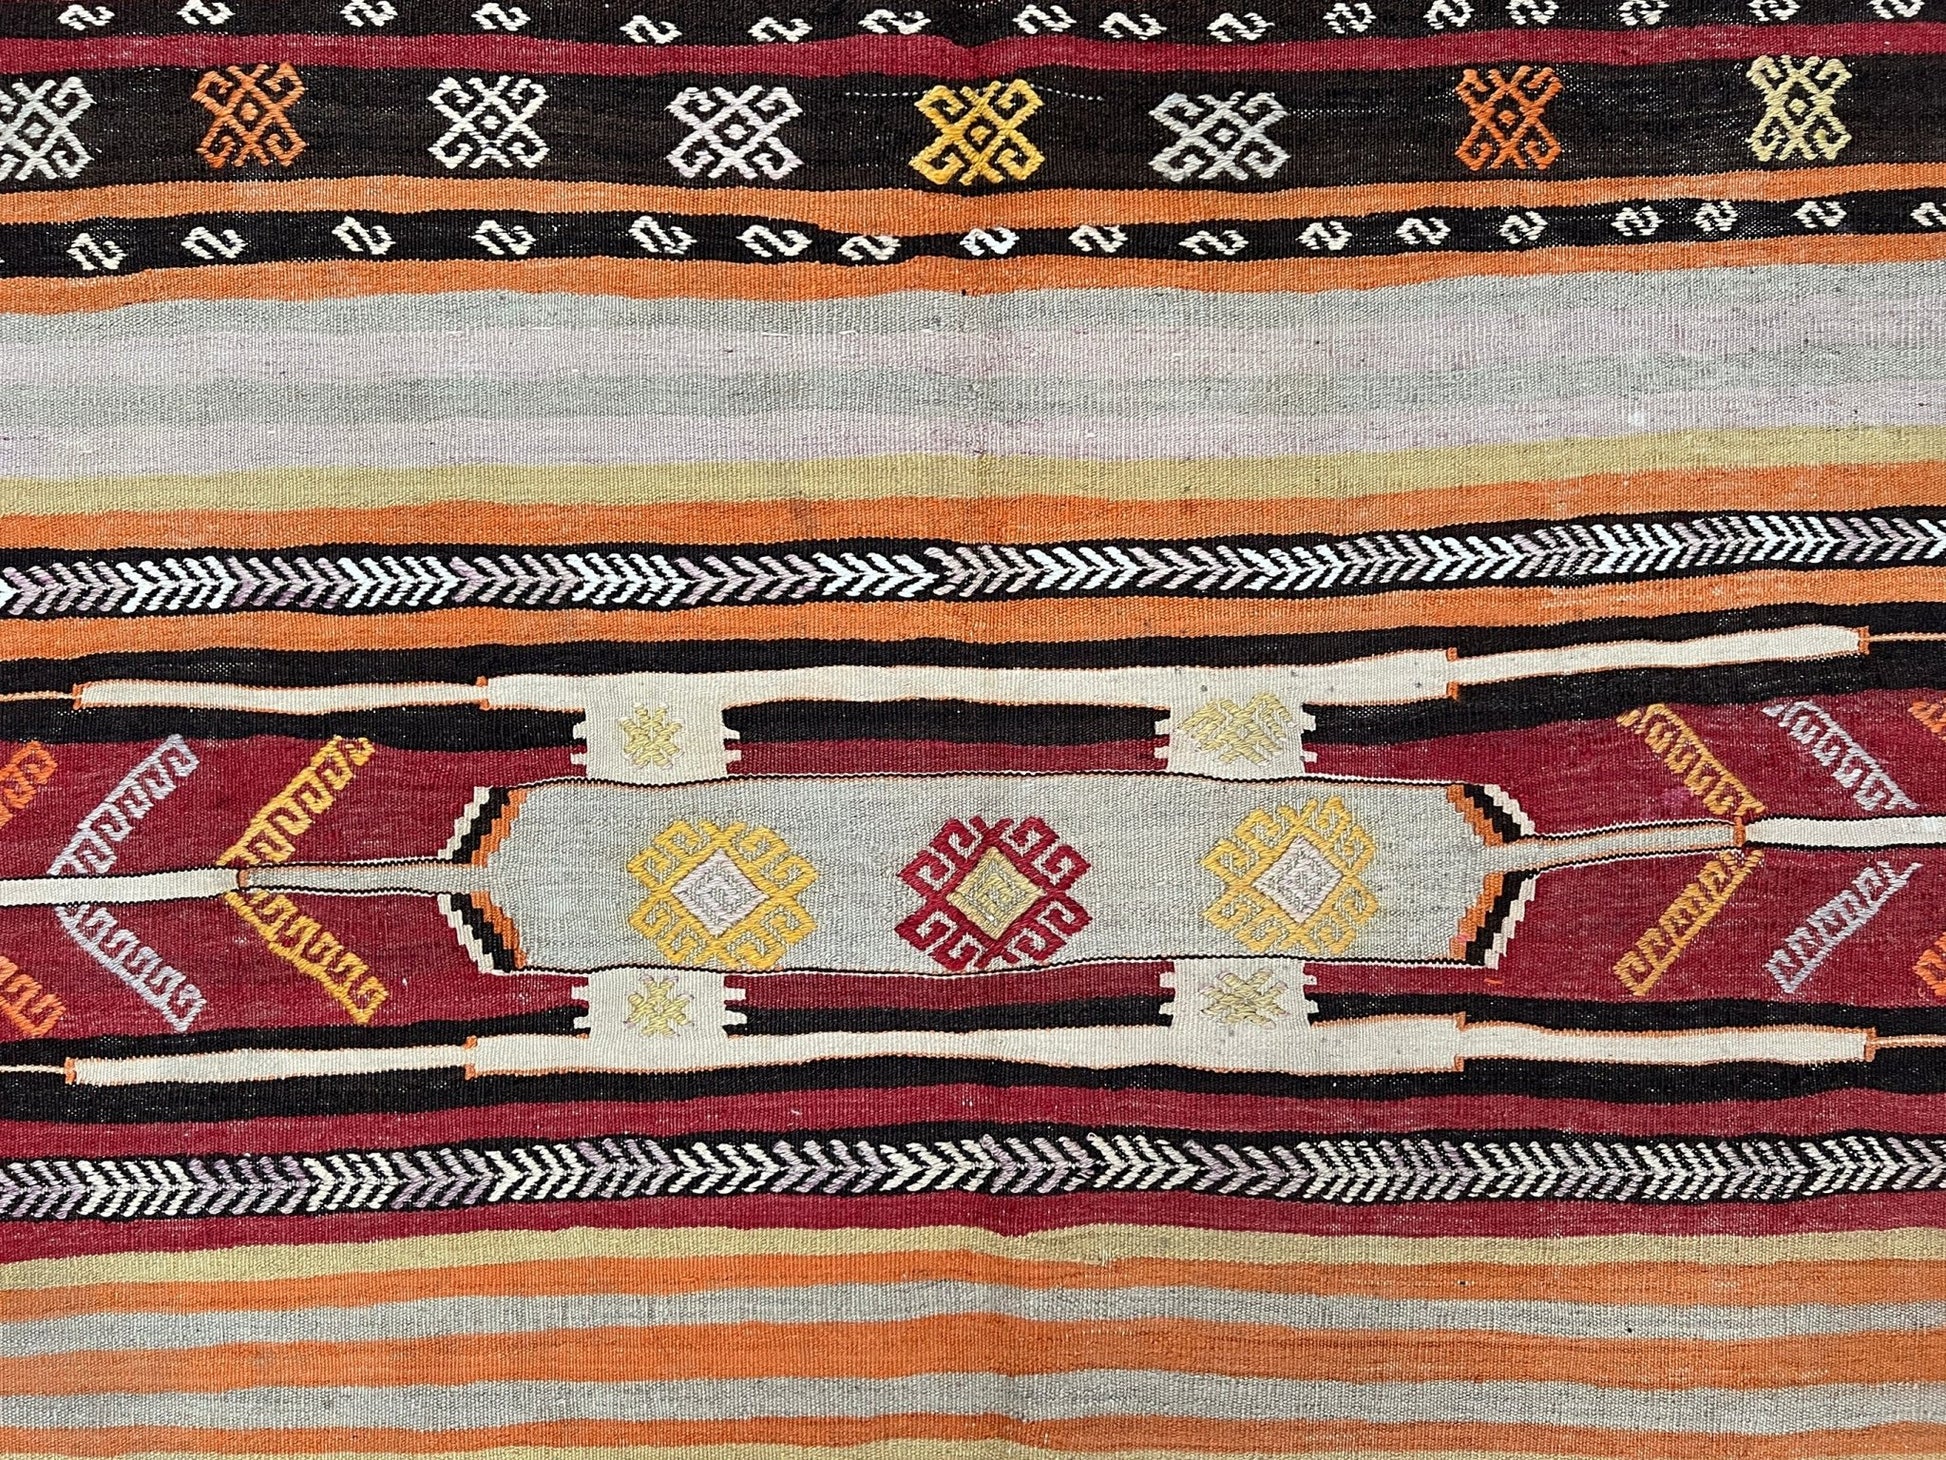 Sivas lambali turkish kilim rug shop San francisco bay area. Handmade vintage wool flatweave rug. Vibrant turkish striped rug.